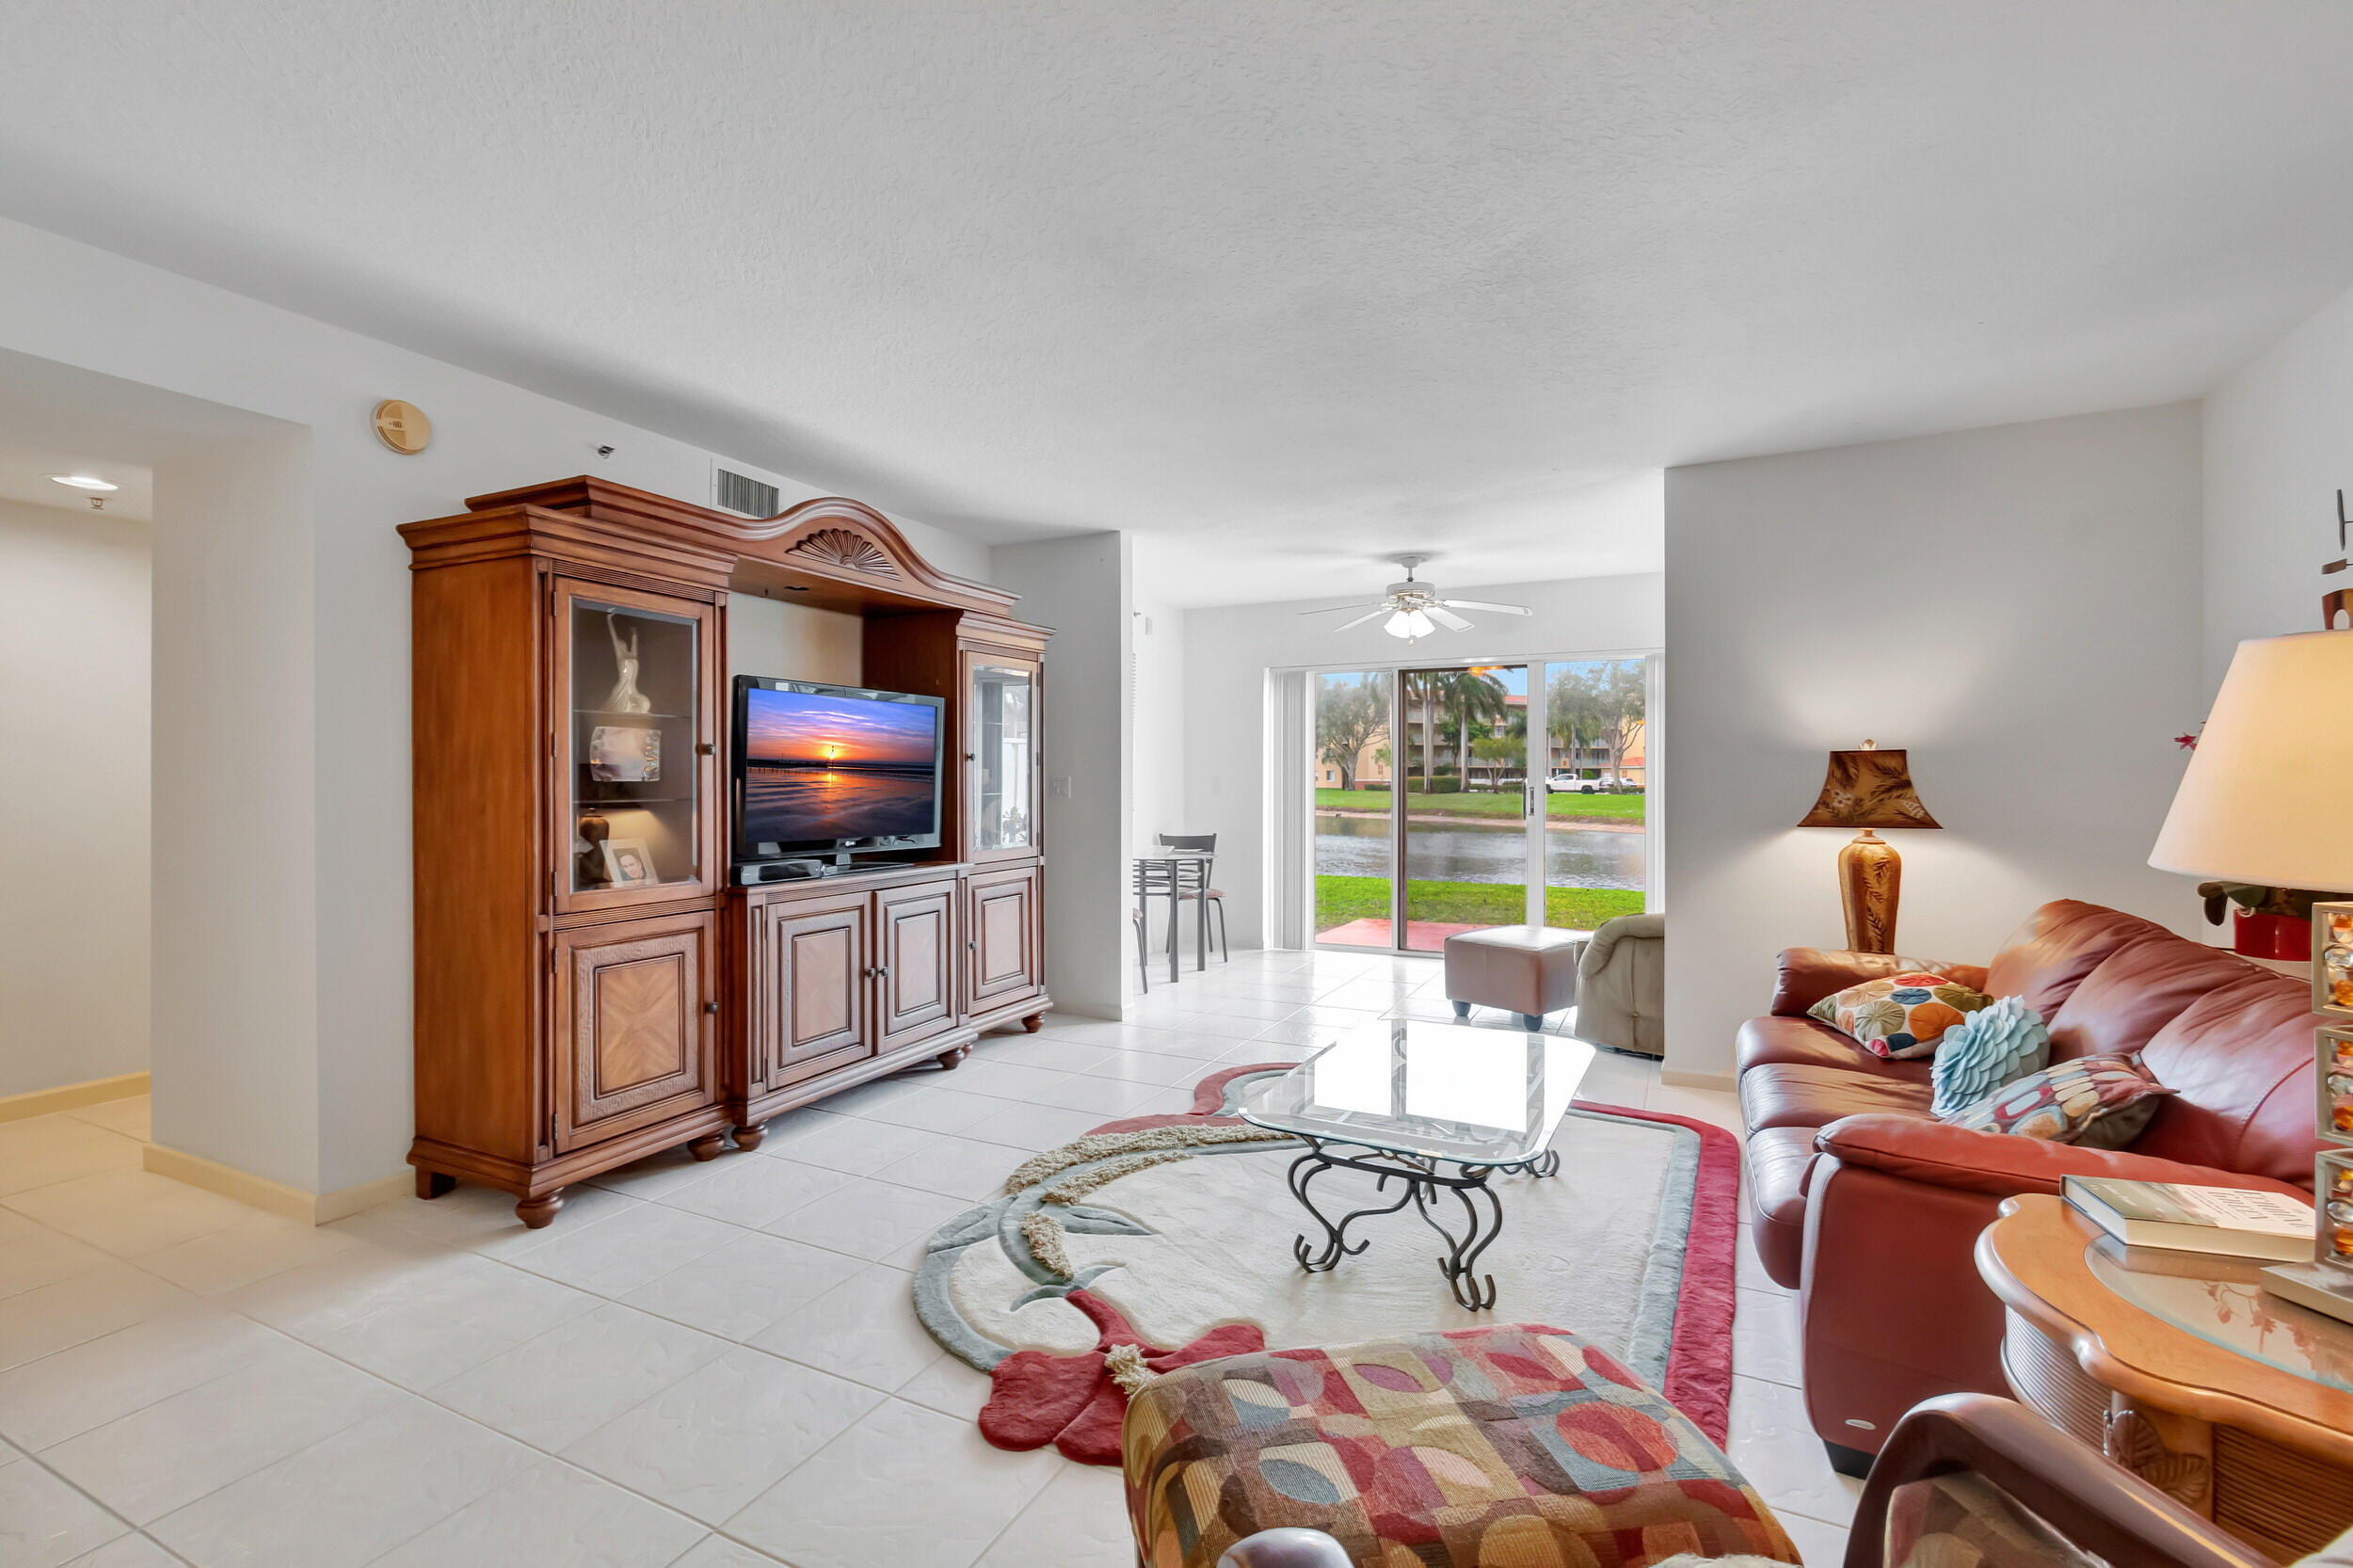 Property for Sale at 5749 Gemstone Court 102, Boynton Beach, Palm Beach County, Florida - Bedrooms: 3 
Bathrooms: 2  - $349,000